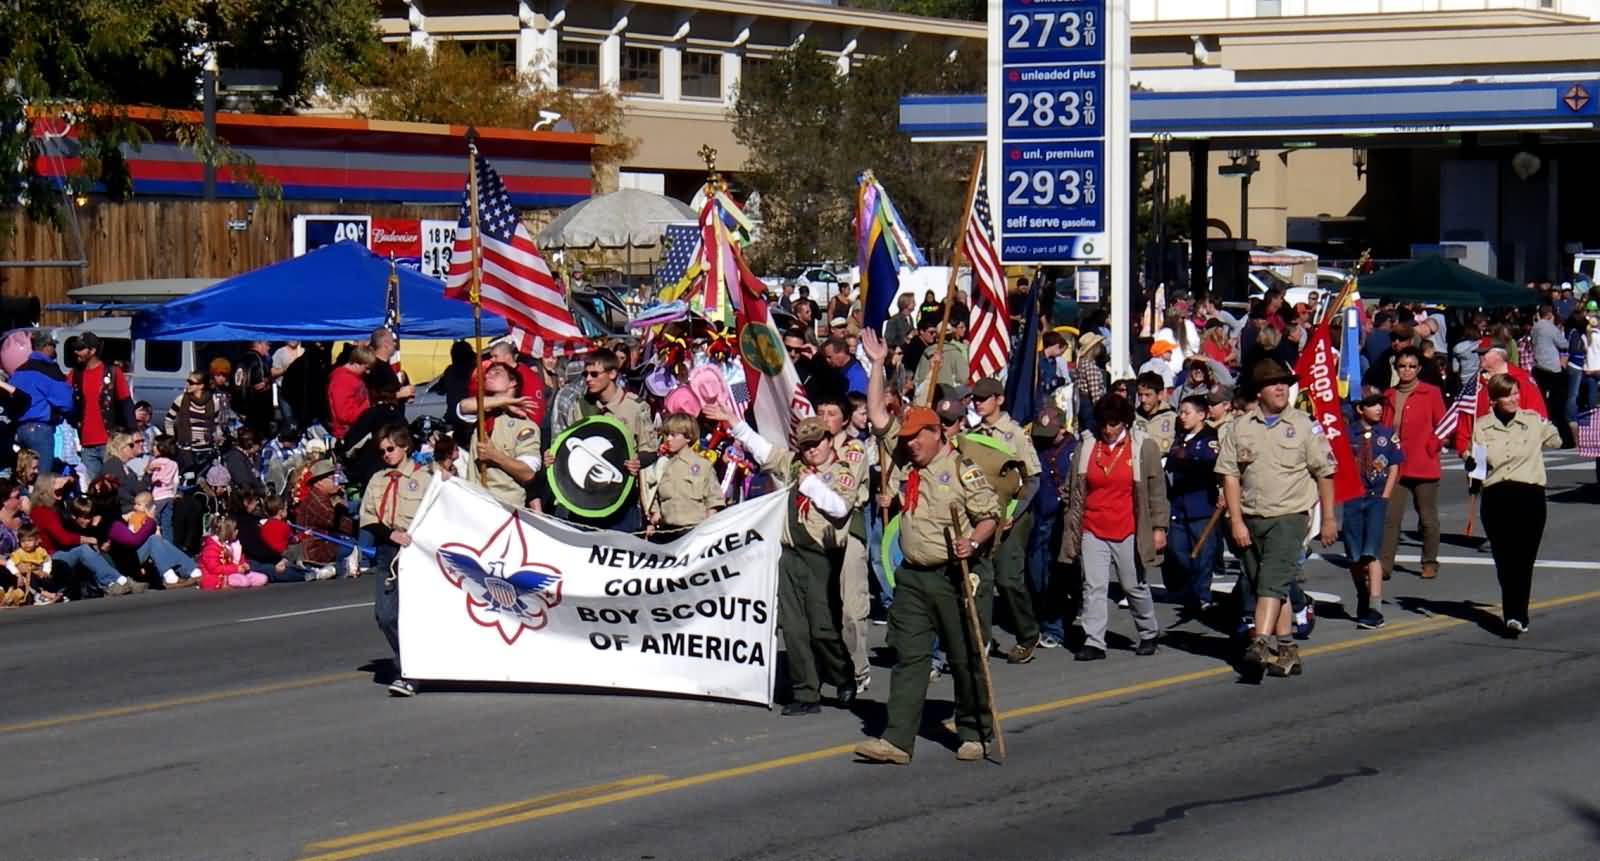 Nevada-Area-Council-Boy-Scout-Parade-During-Nevada-Day-Celebration